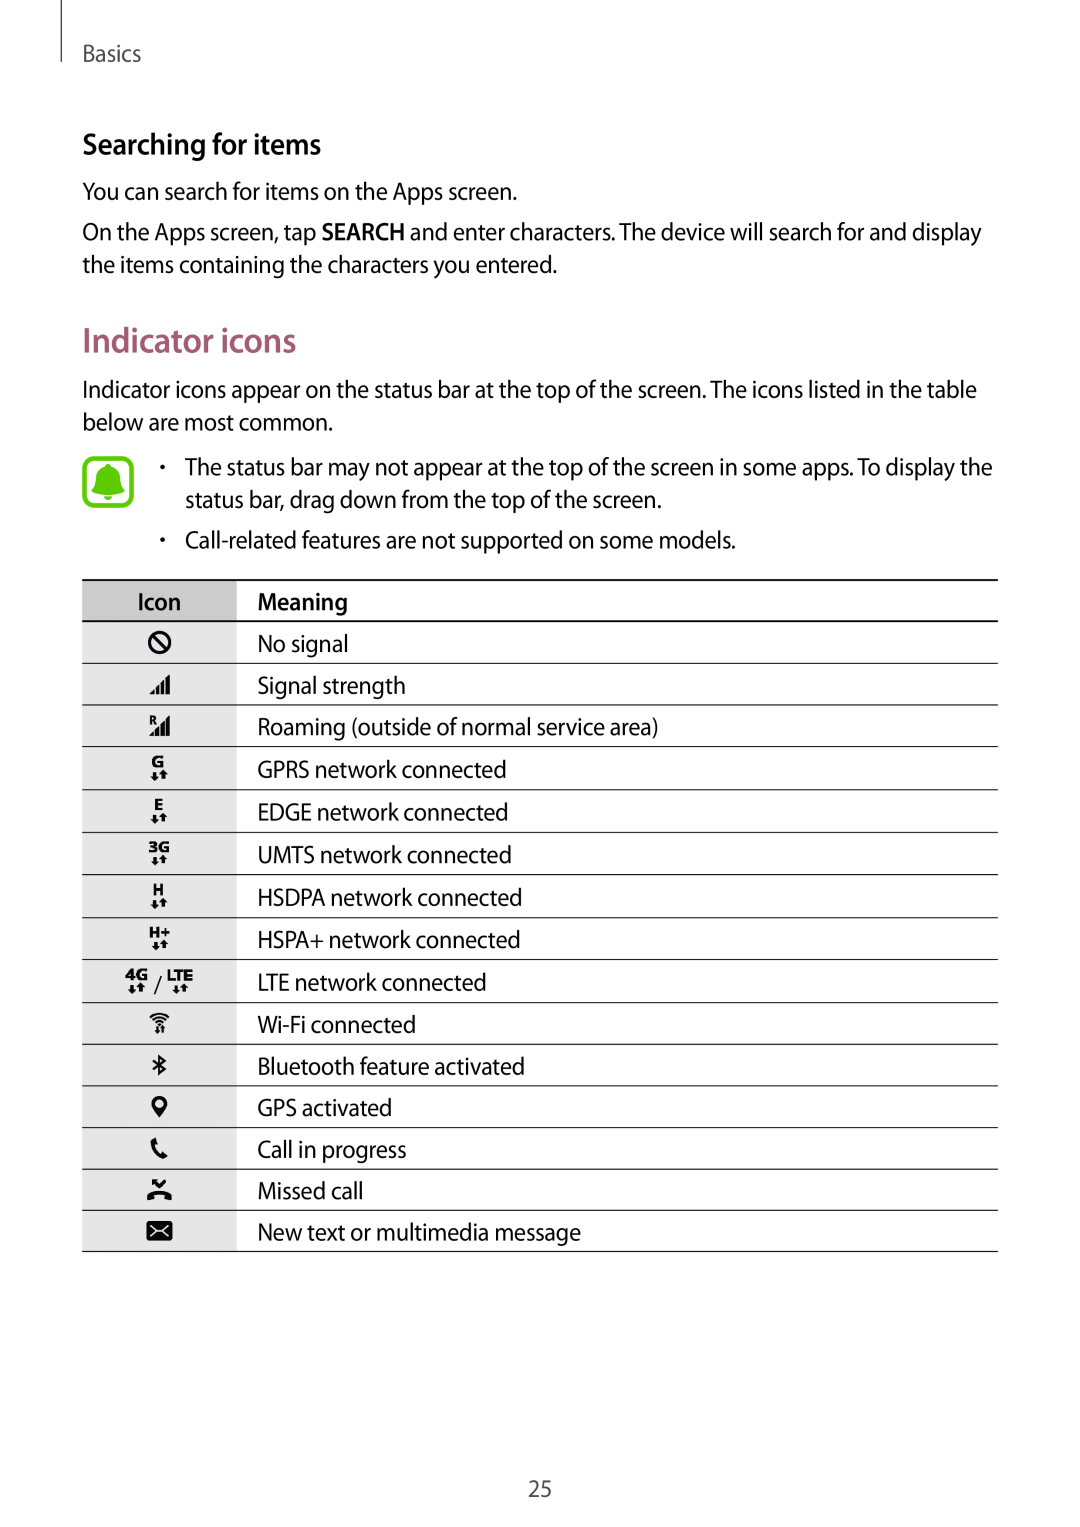 Samsung SM-T719NZKEBGL, SM-T819NZKEDBT, SM-T719NZKEDBT manual Indicator icons, Searching for items, Icon Meaning, Basics 